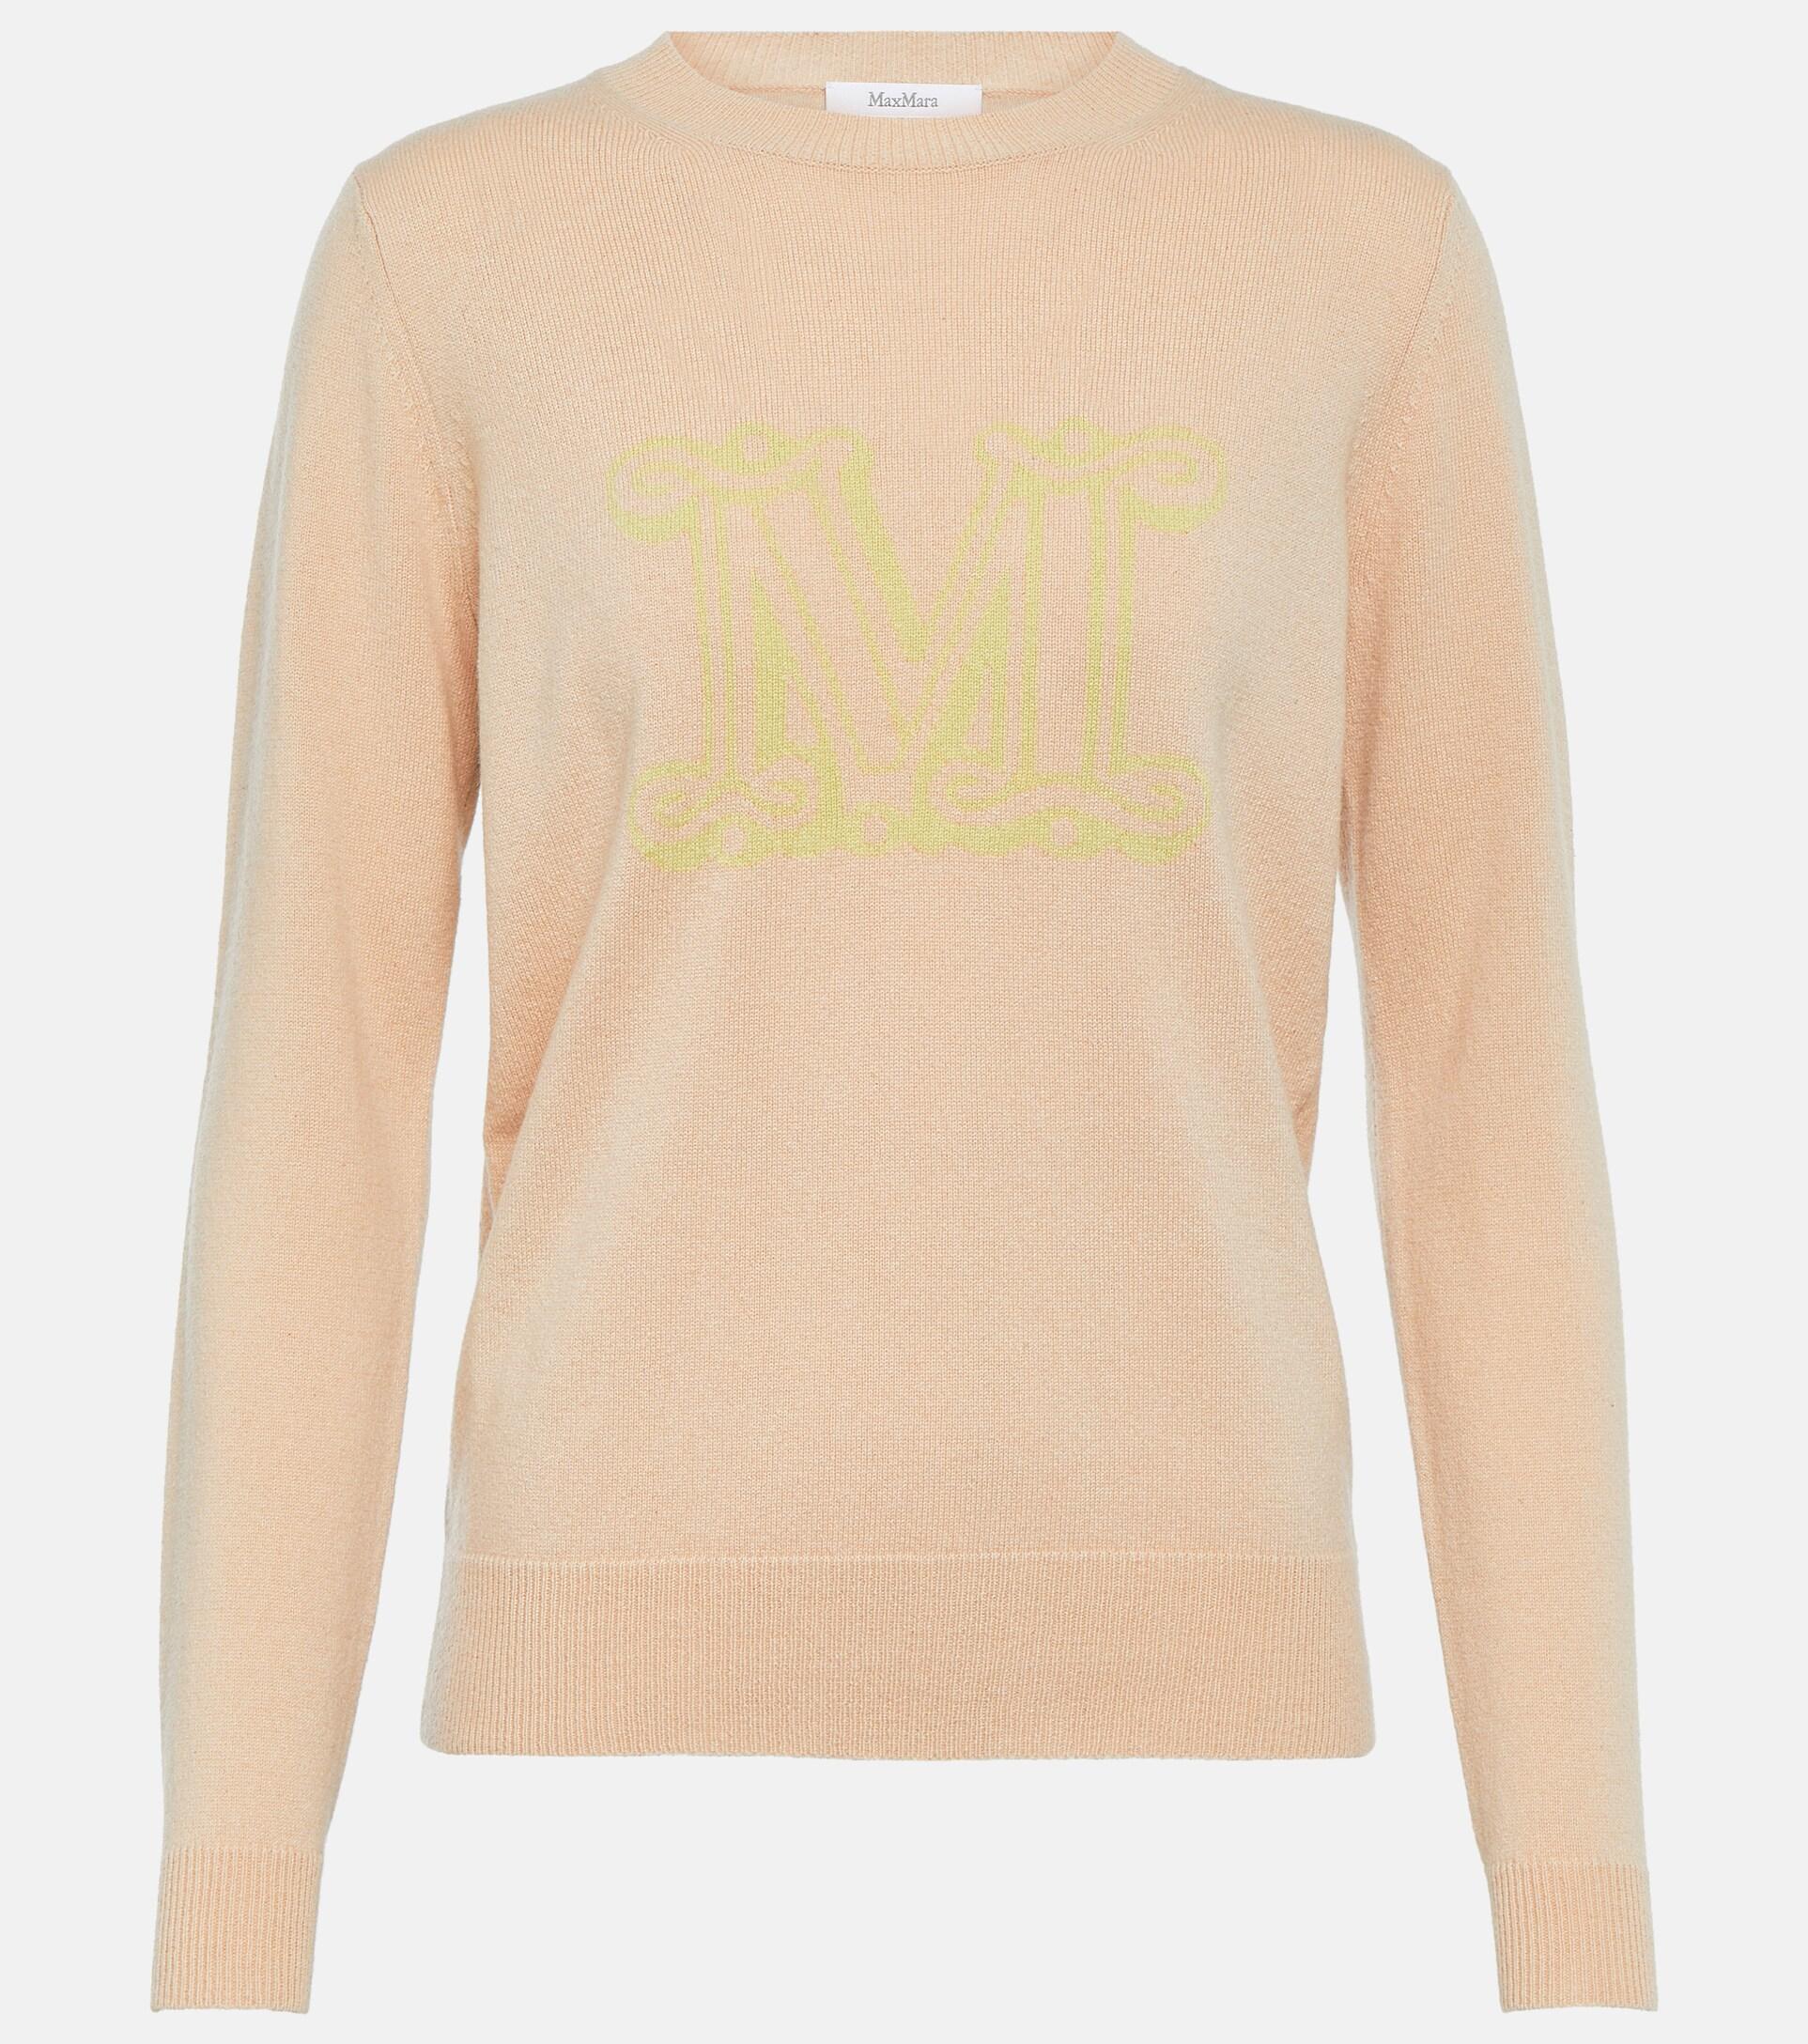 Max Mara Pamir Logo Cashmere Sweater in Natural | Lyst